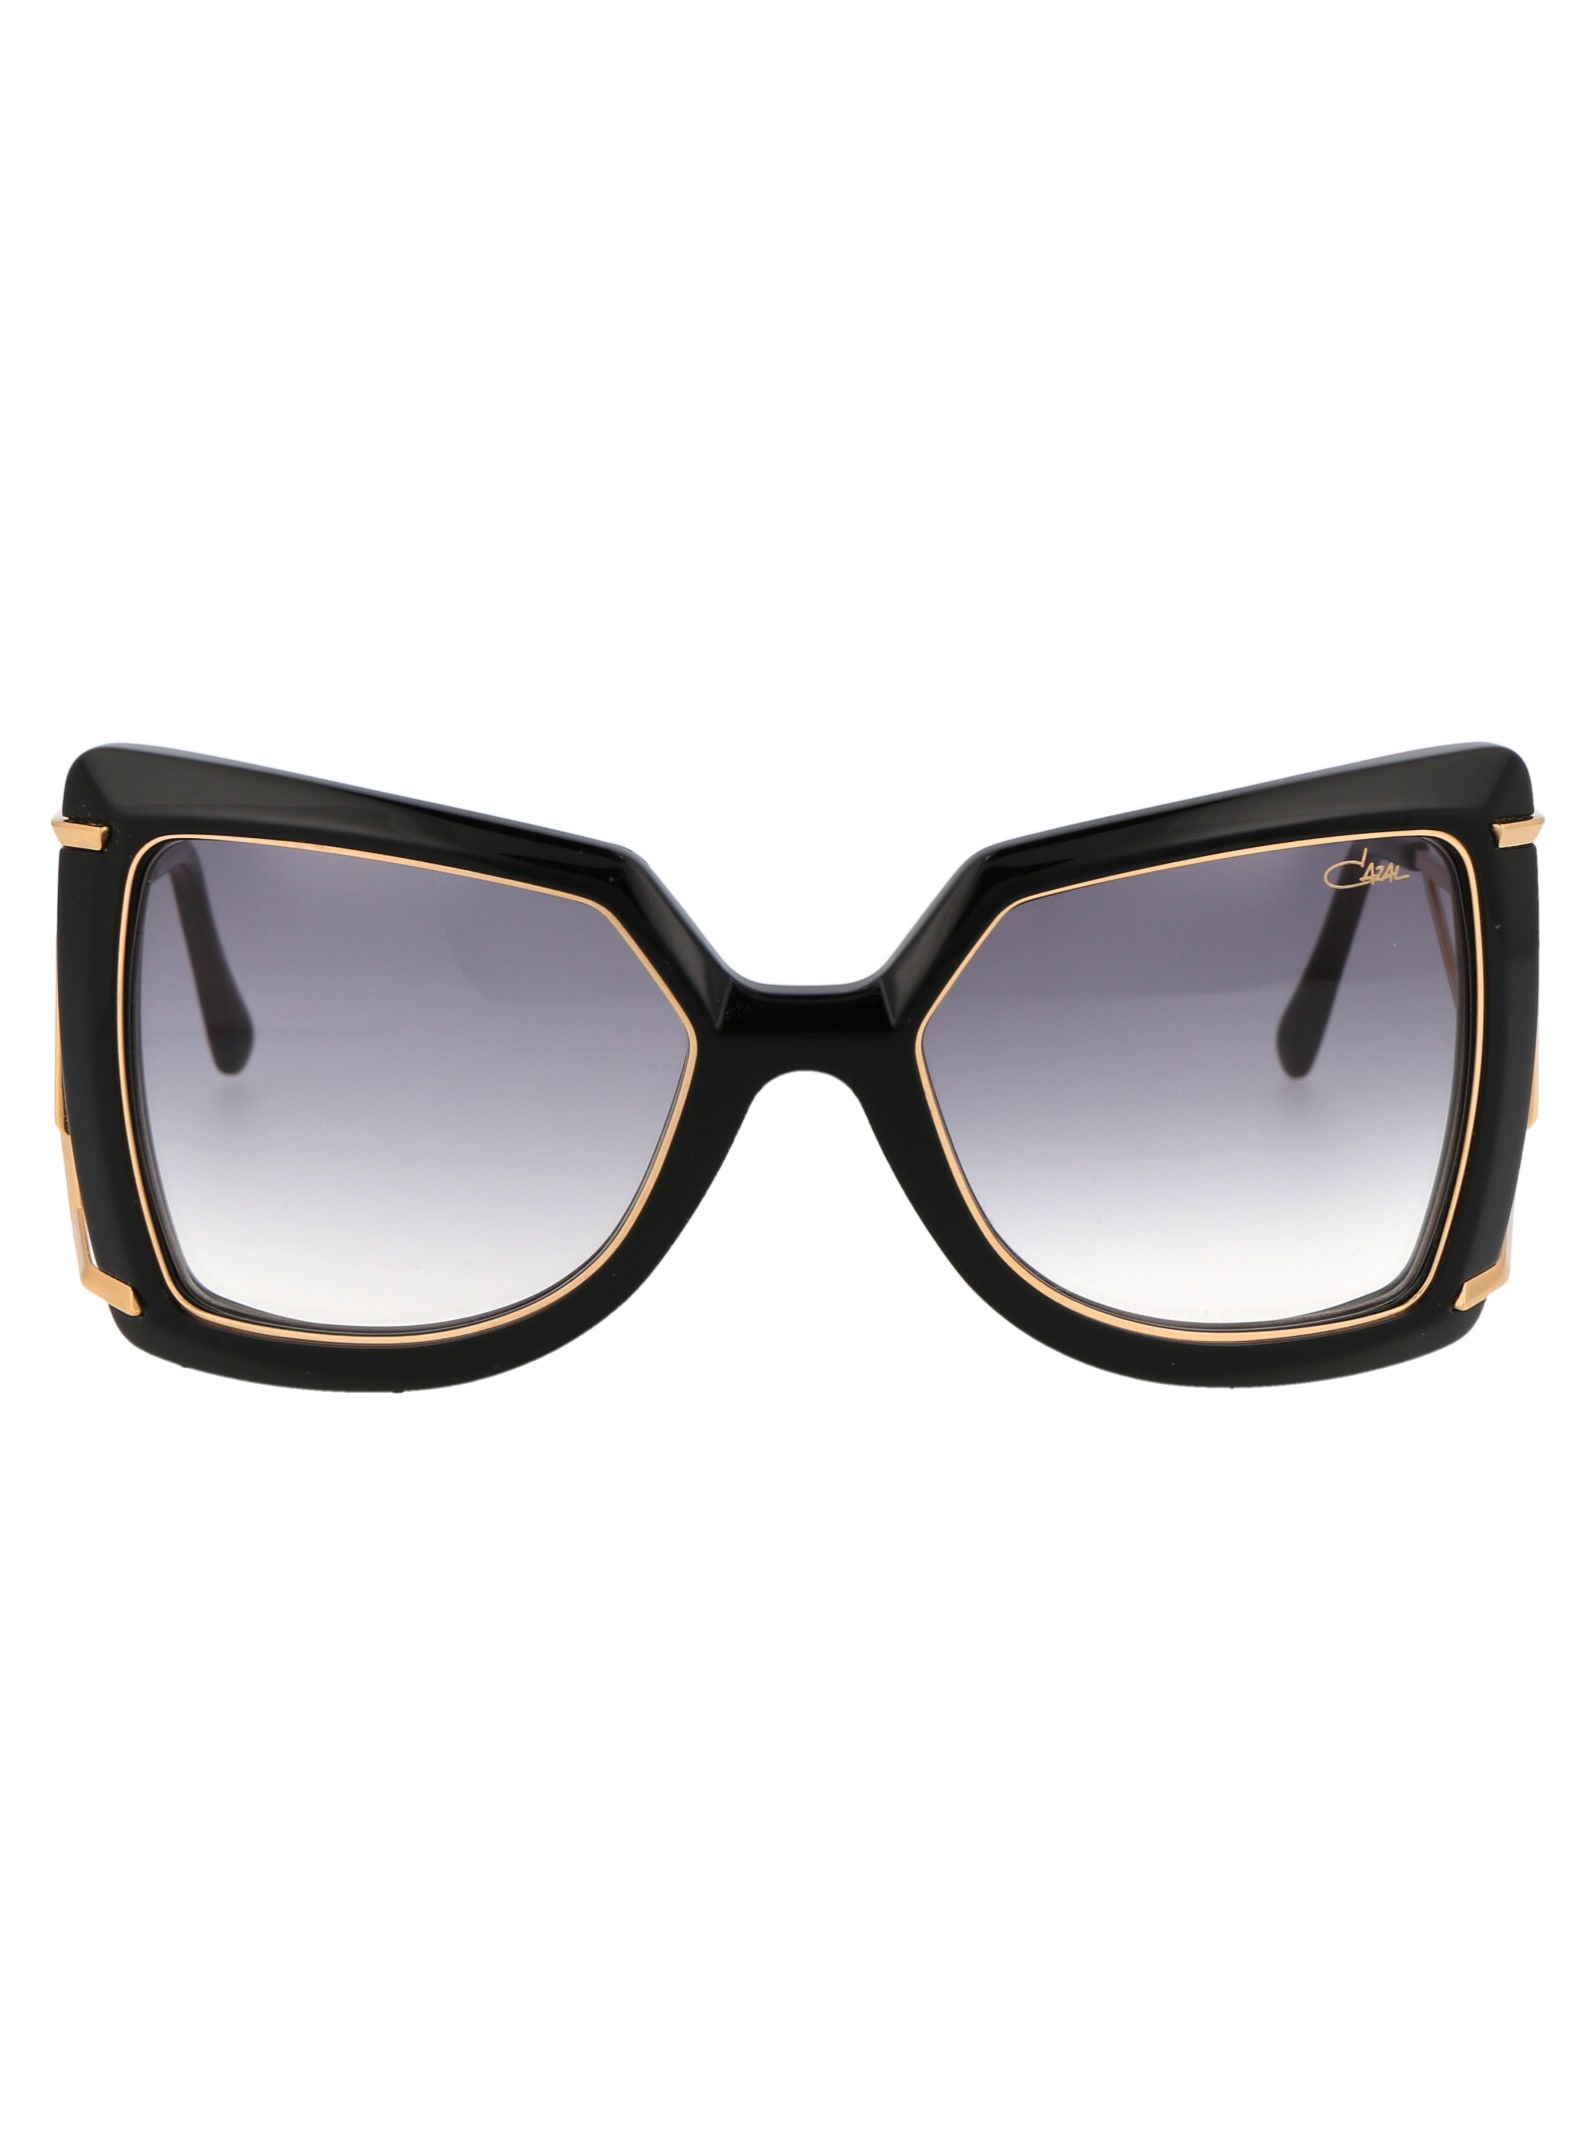 Cazal Mod. 8506 Sunglasses